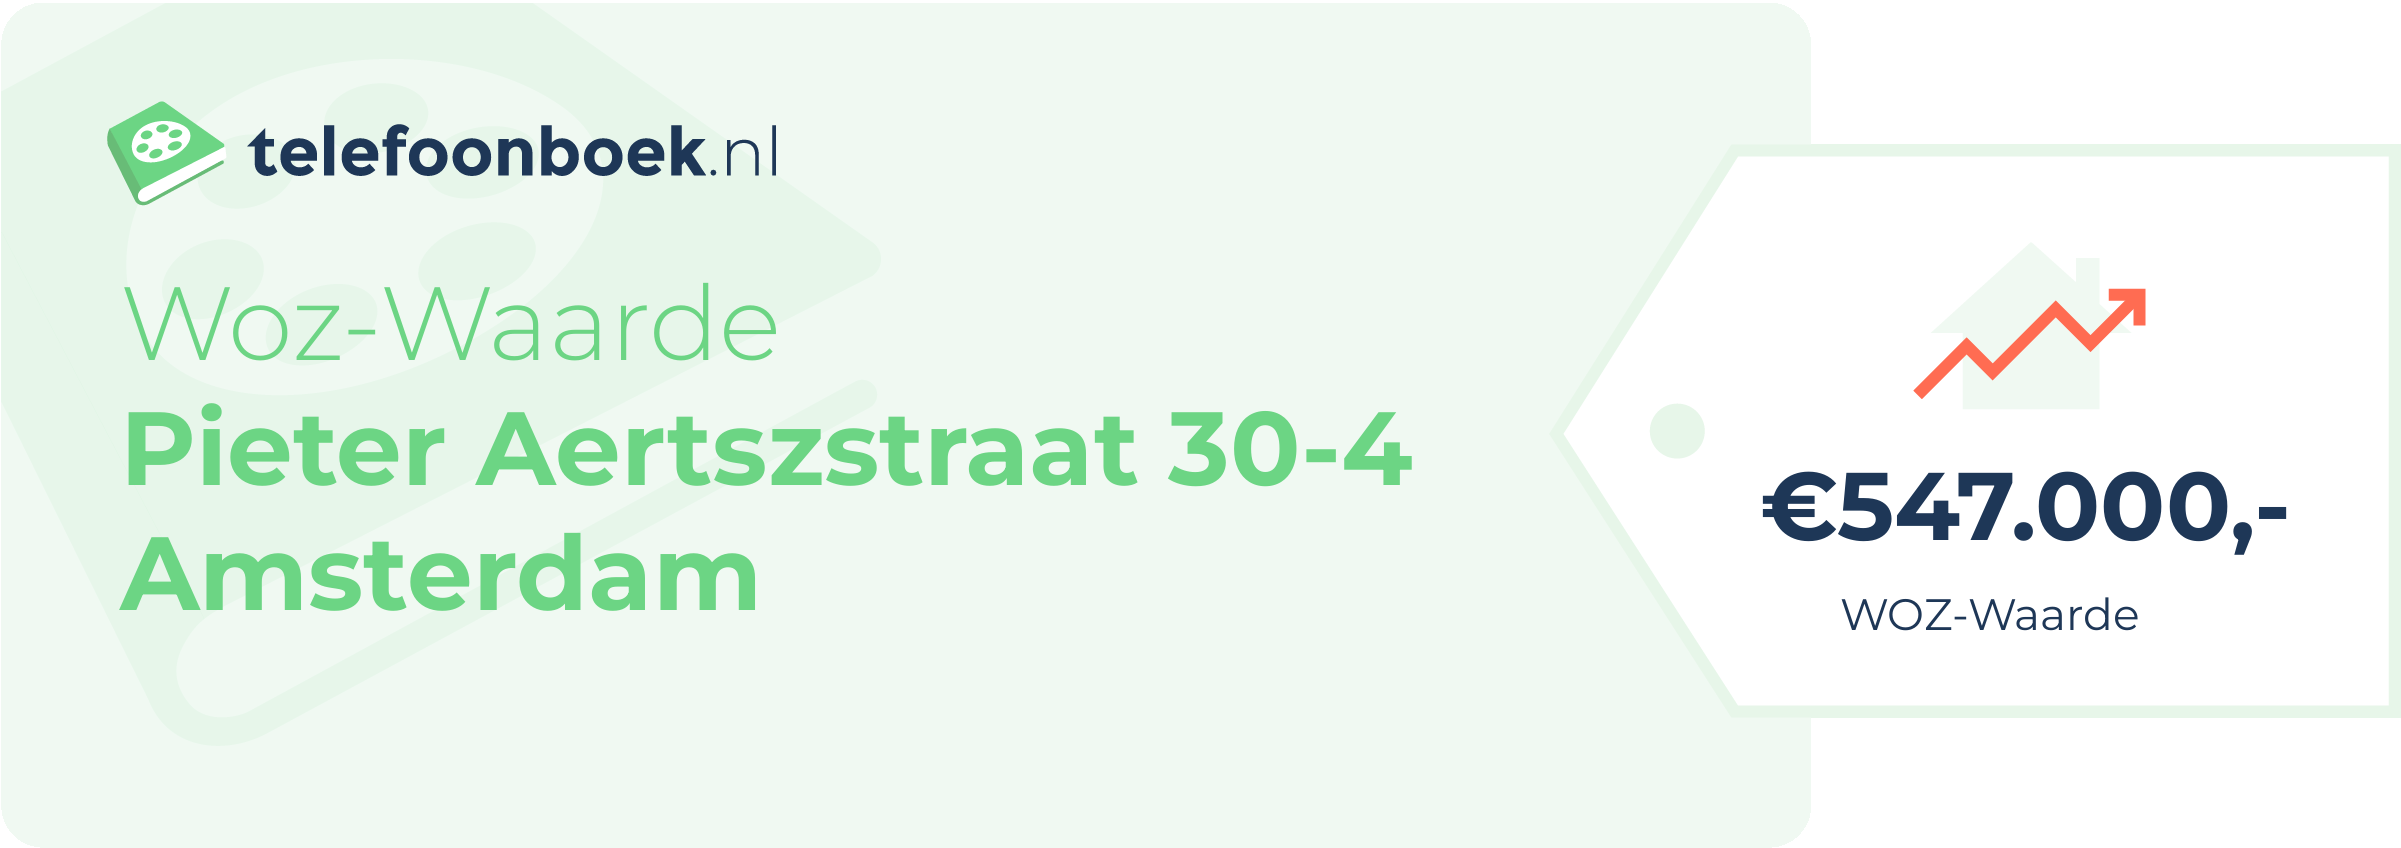 WOZ-waarde Pieter Aertszstraat 30-4 Amsterdam